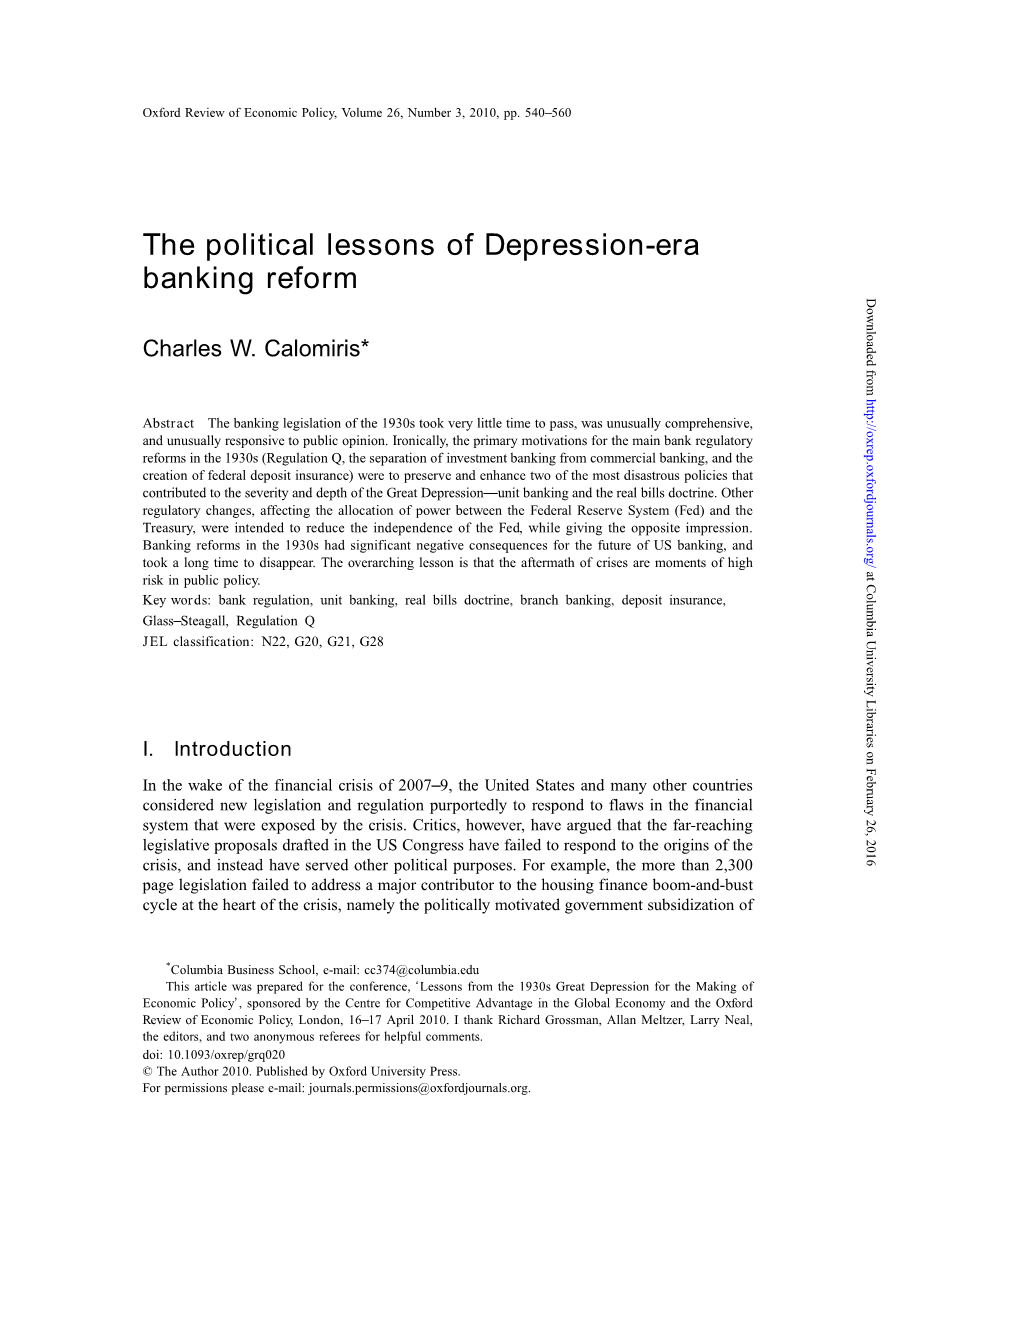 Political Lessons of Depression-Era Banking Reform.Pdf